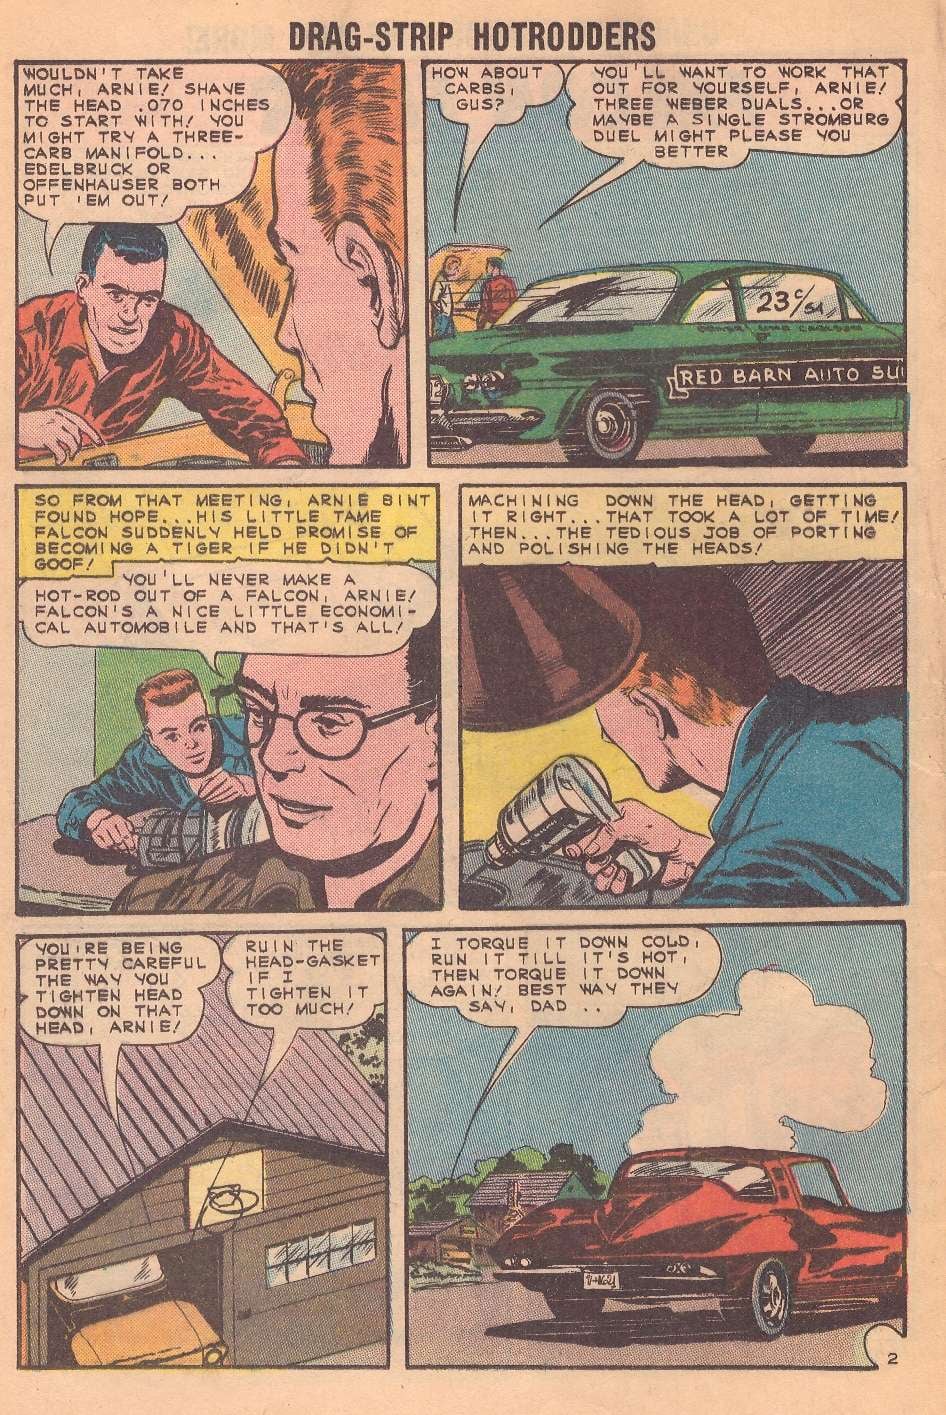 Drag-Strip Hotrodders - 60s Us Comics - January 1965 13203210